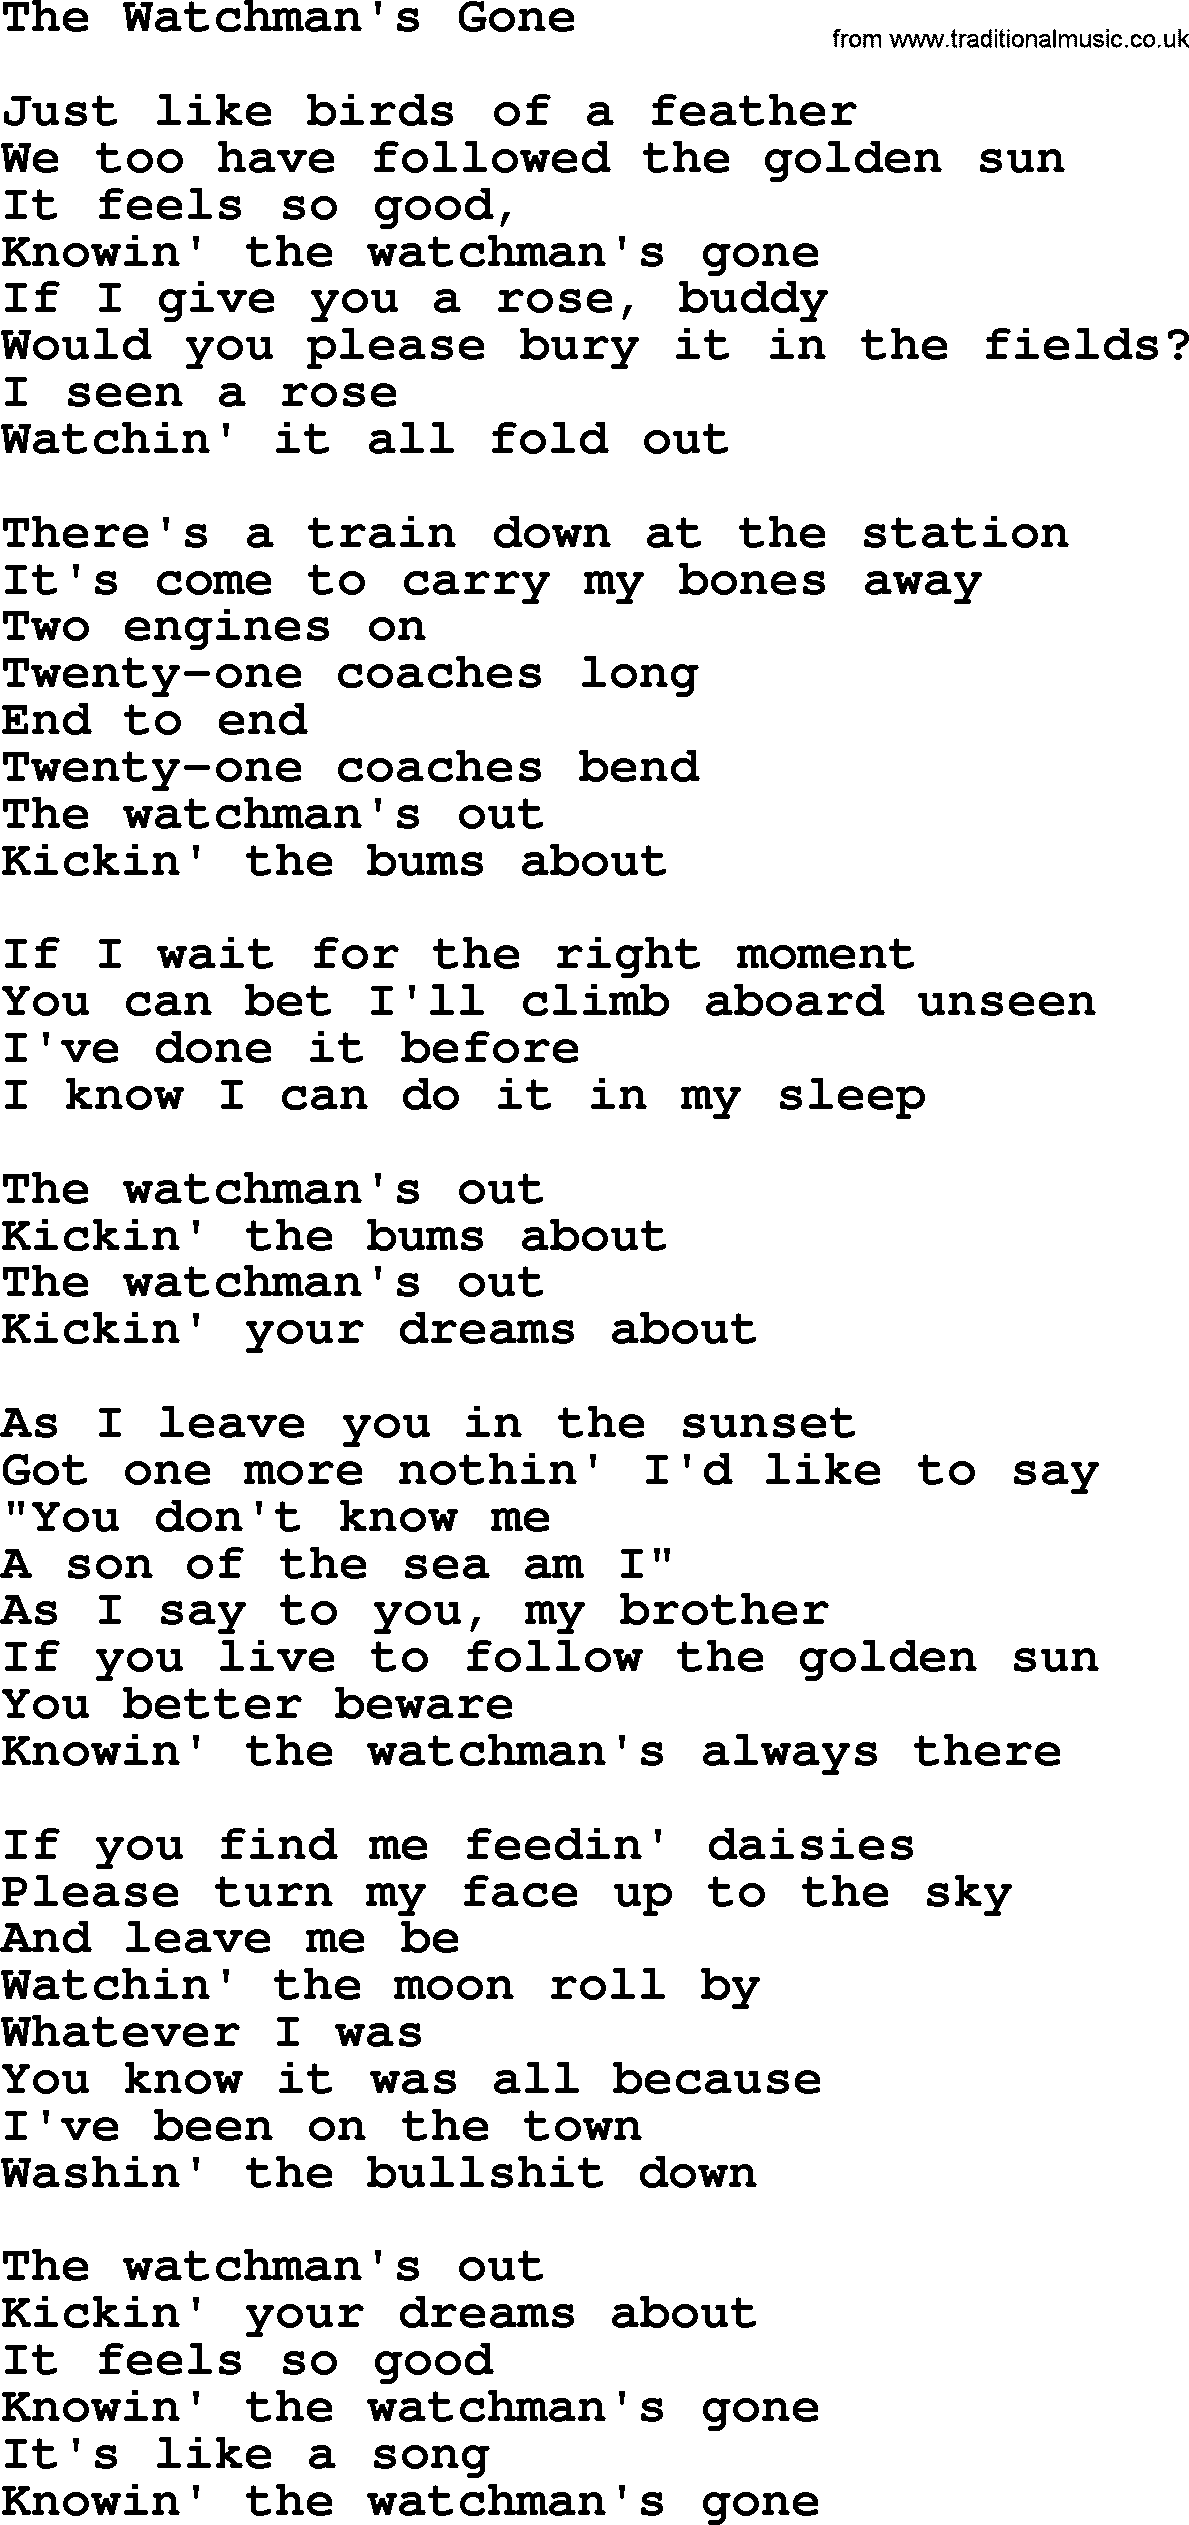 Gordon Lightfoot song The Watchman's Gone, lyrics